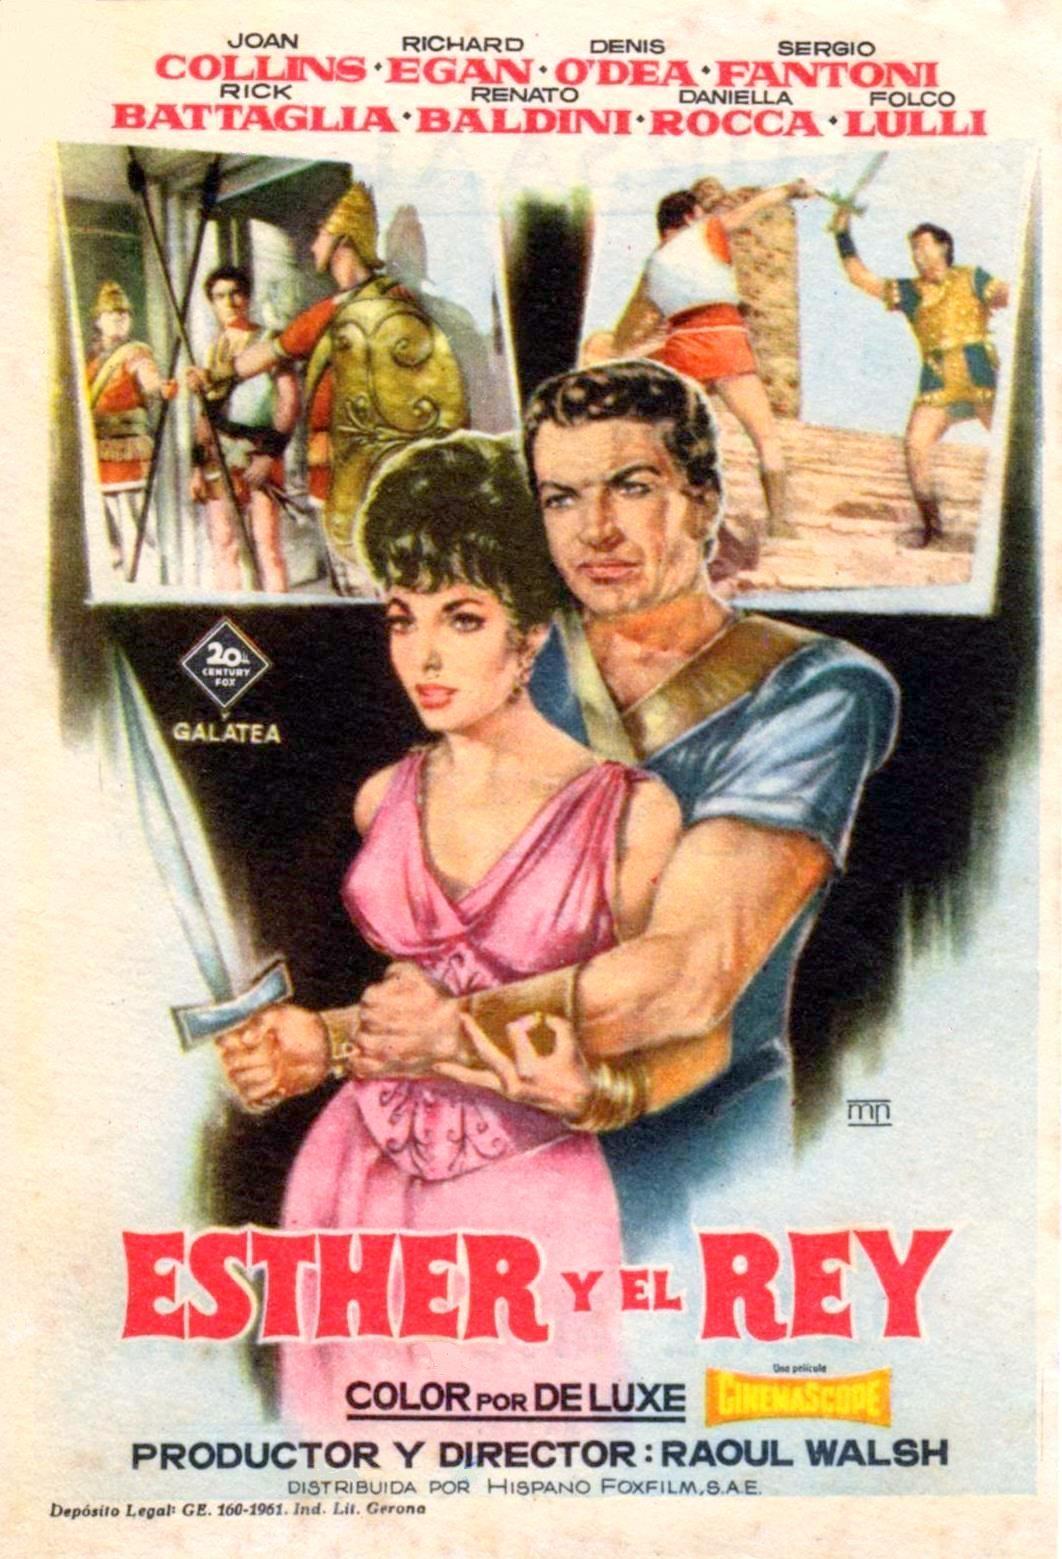 Постер фильма Эсфирь и царь | Esther and the King